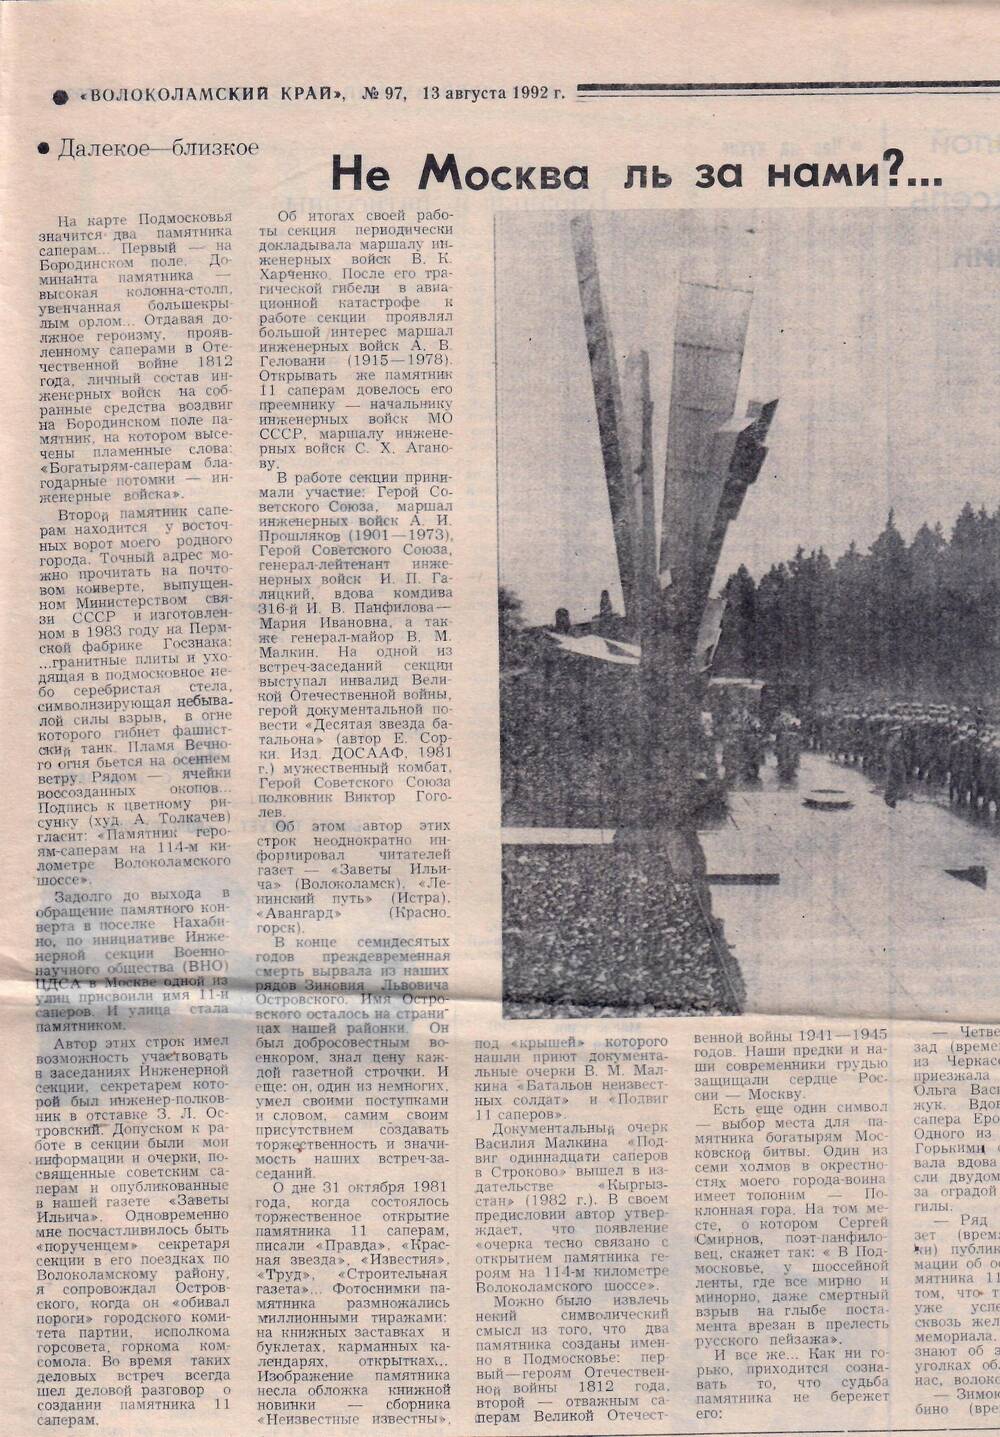 Газета Волоколамский край, № 97 (10306), 13 августа 1992 г.